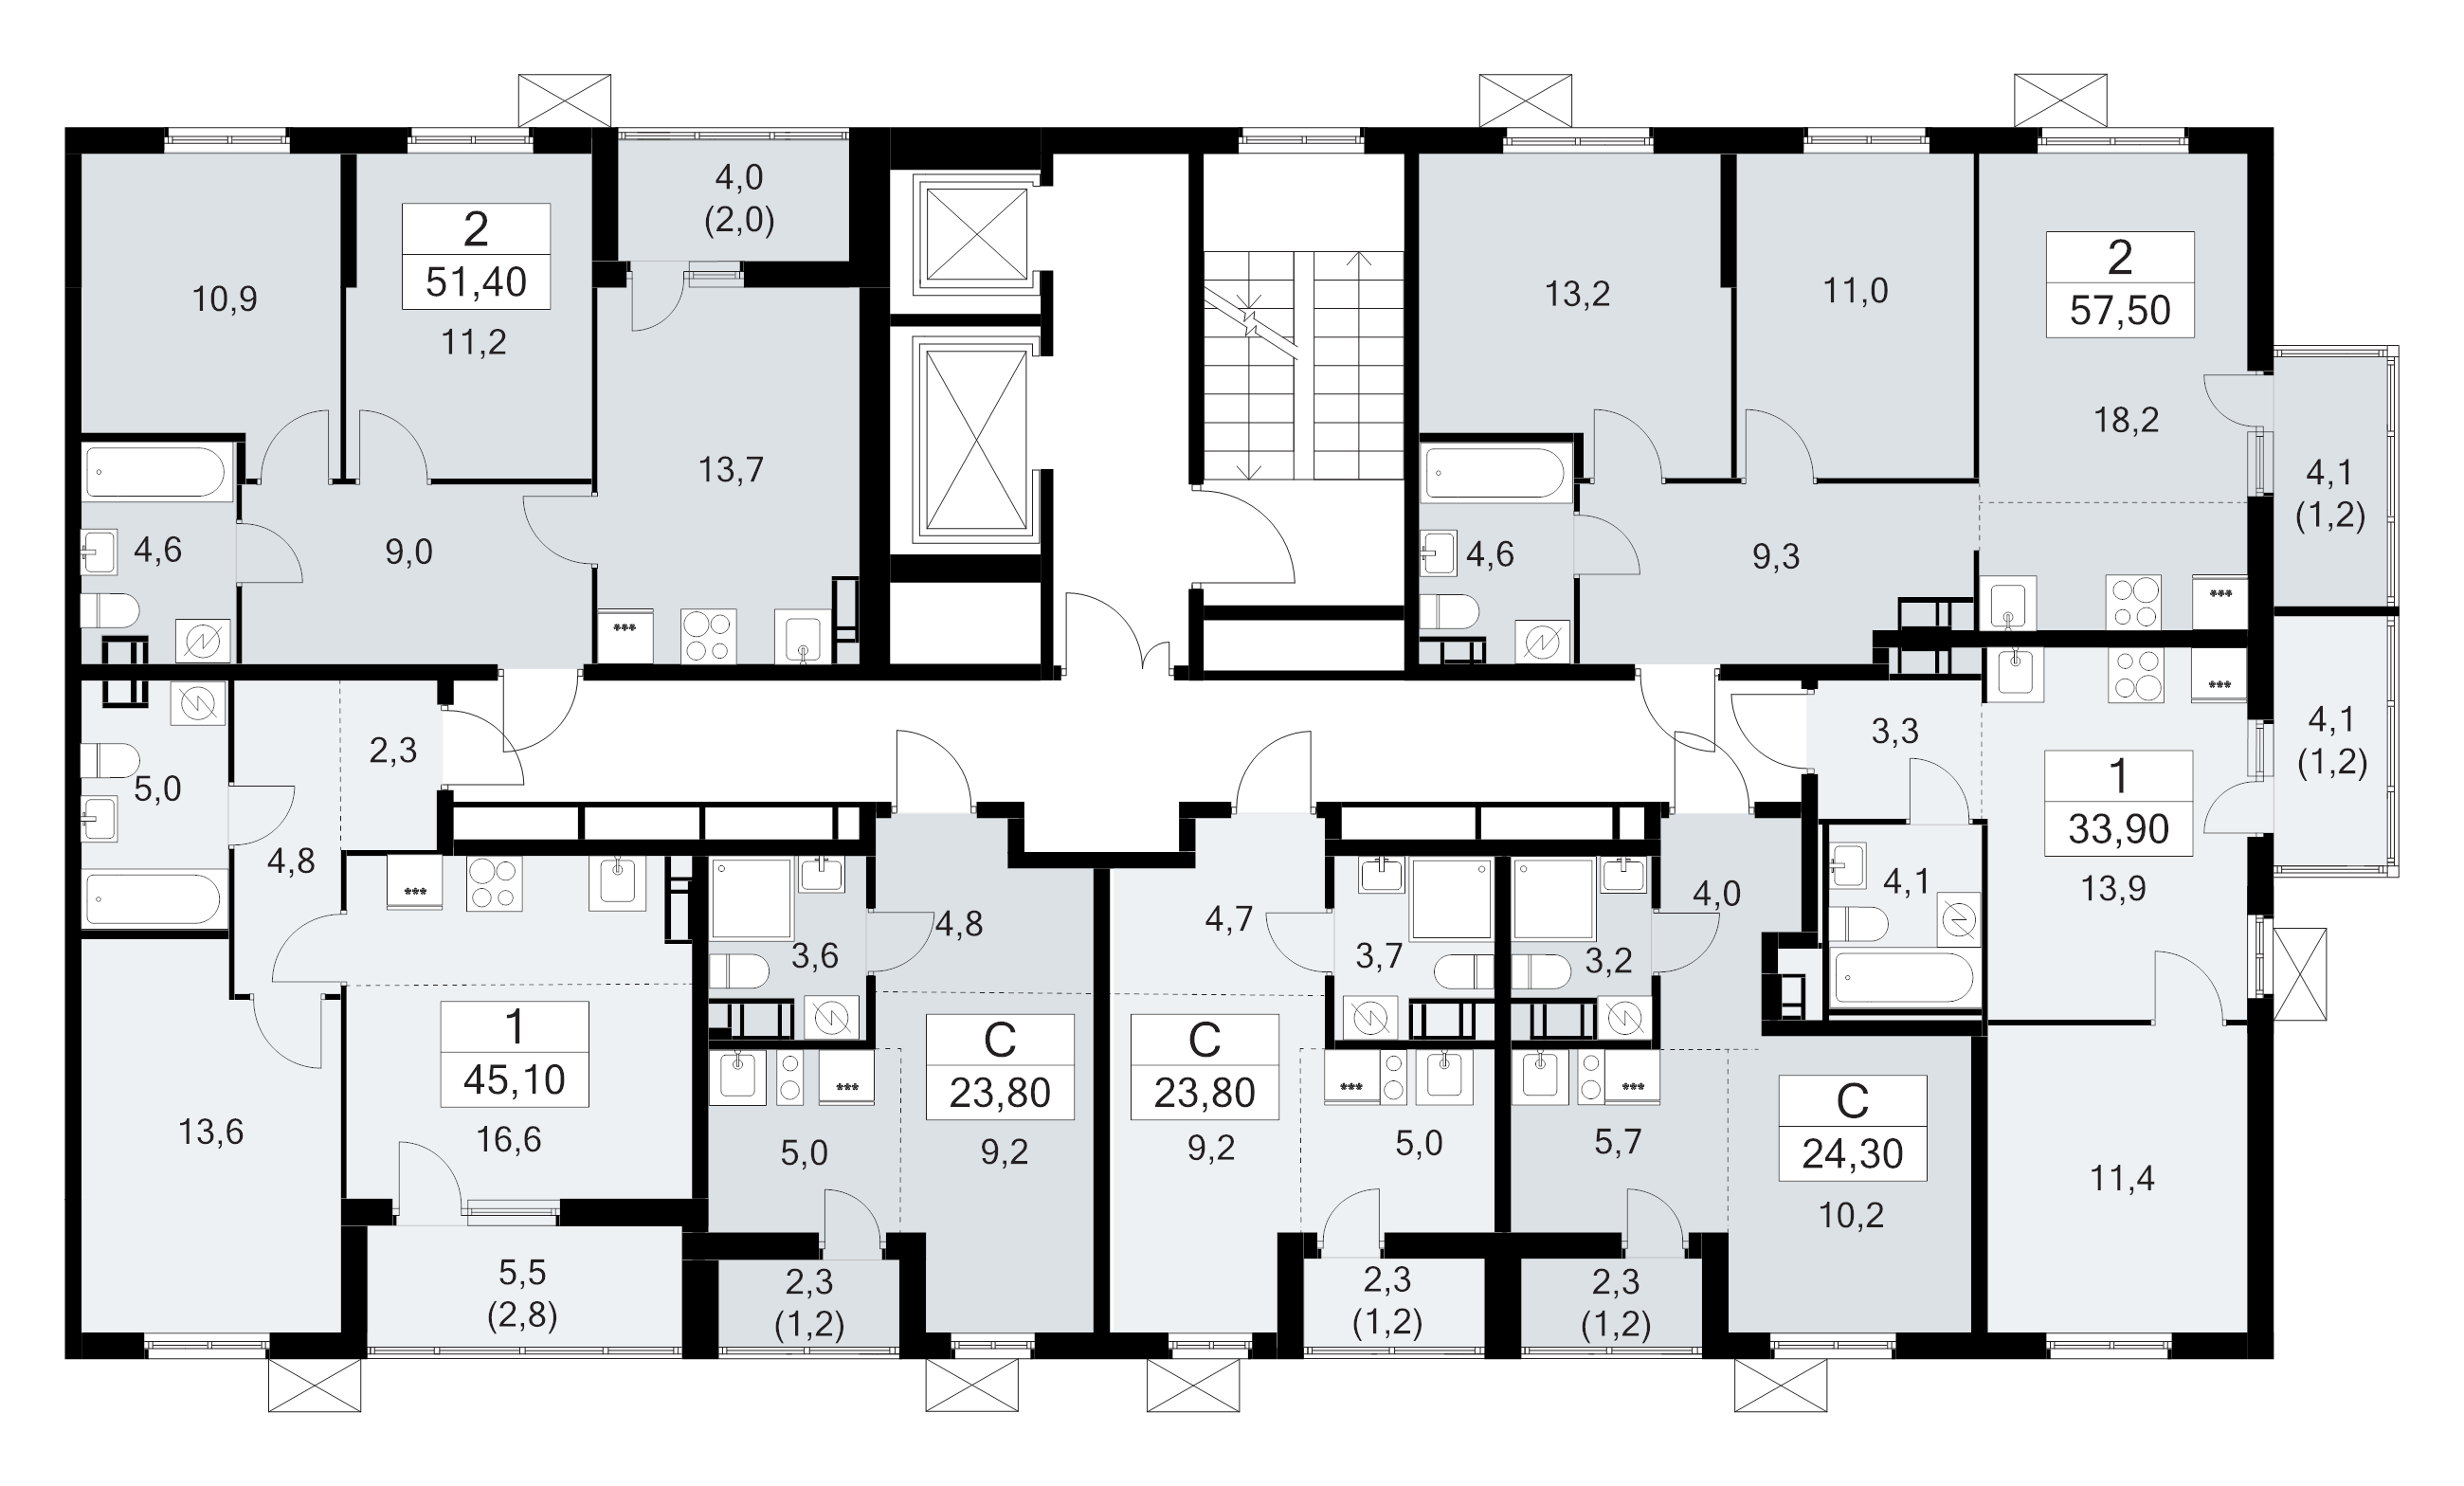 2-комнатная (Евро) квартира, 33.9 м² - планировка этажа